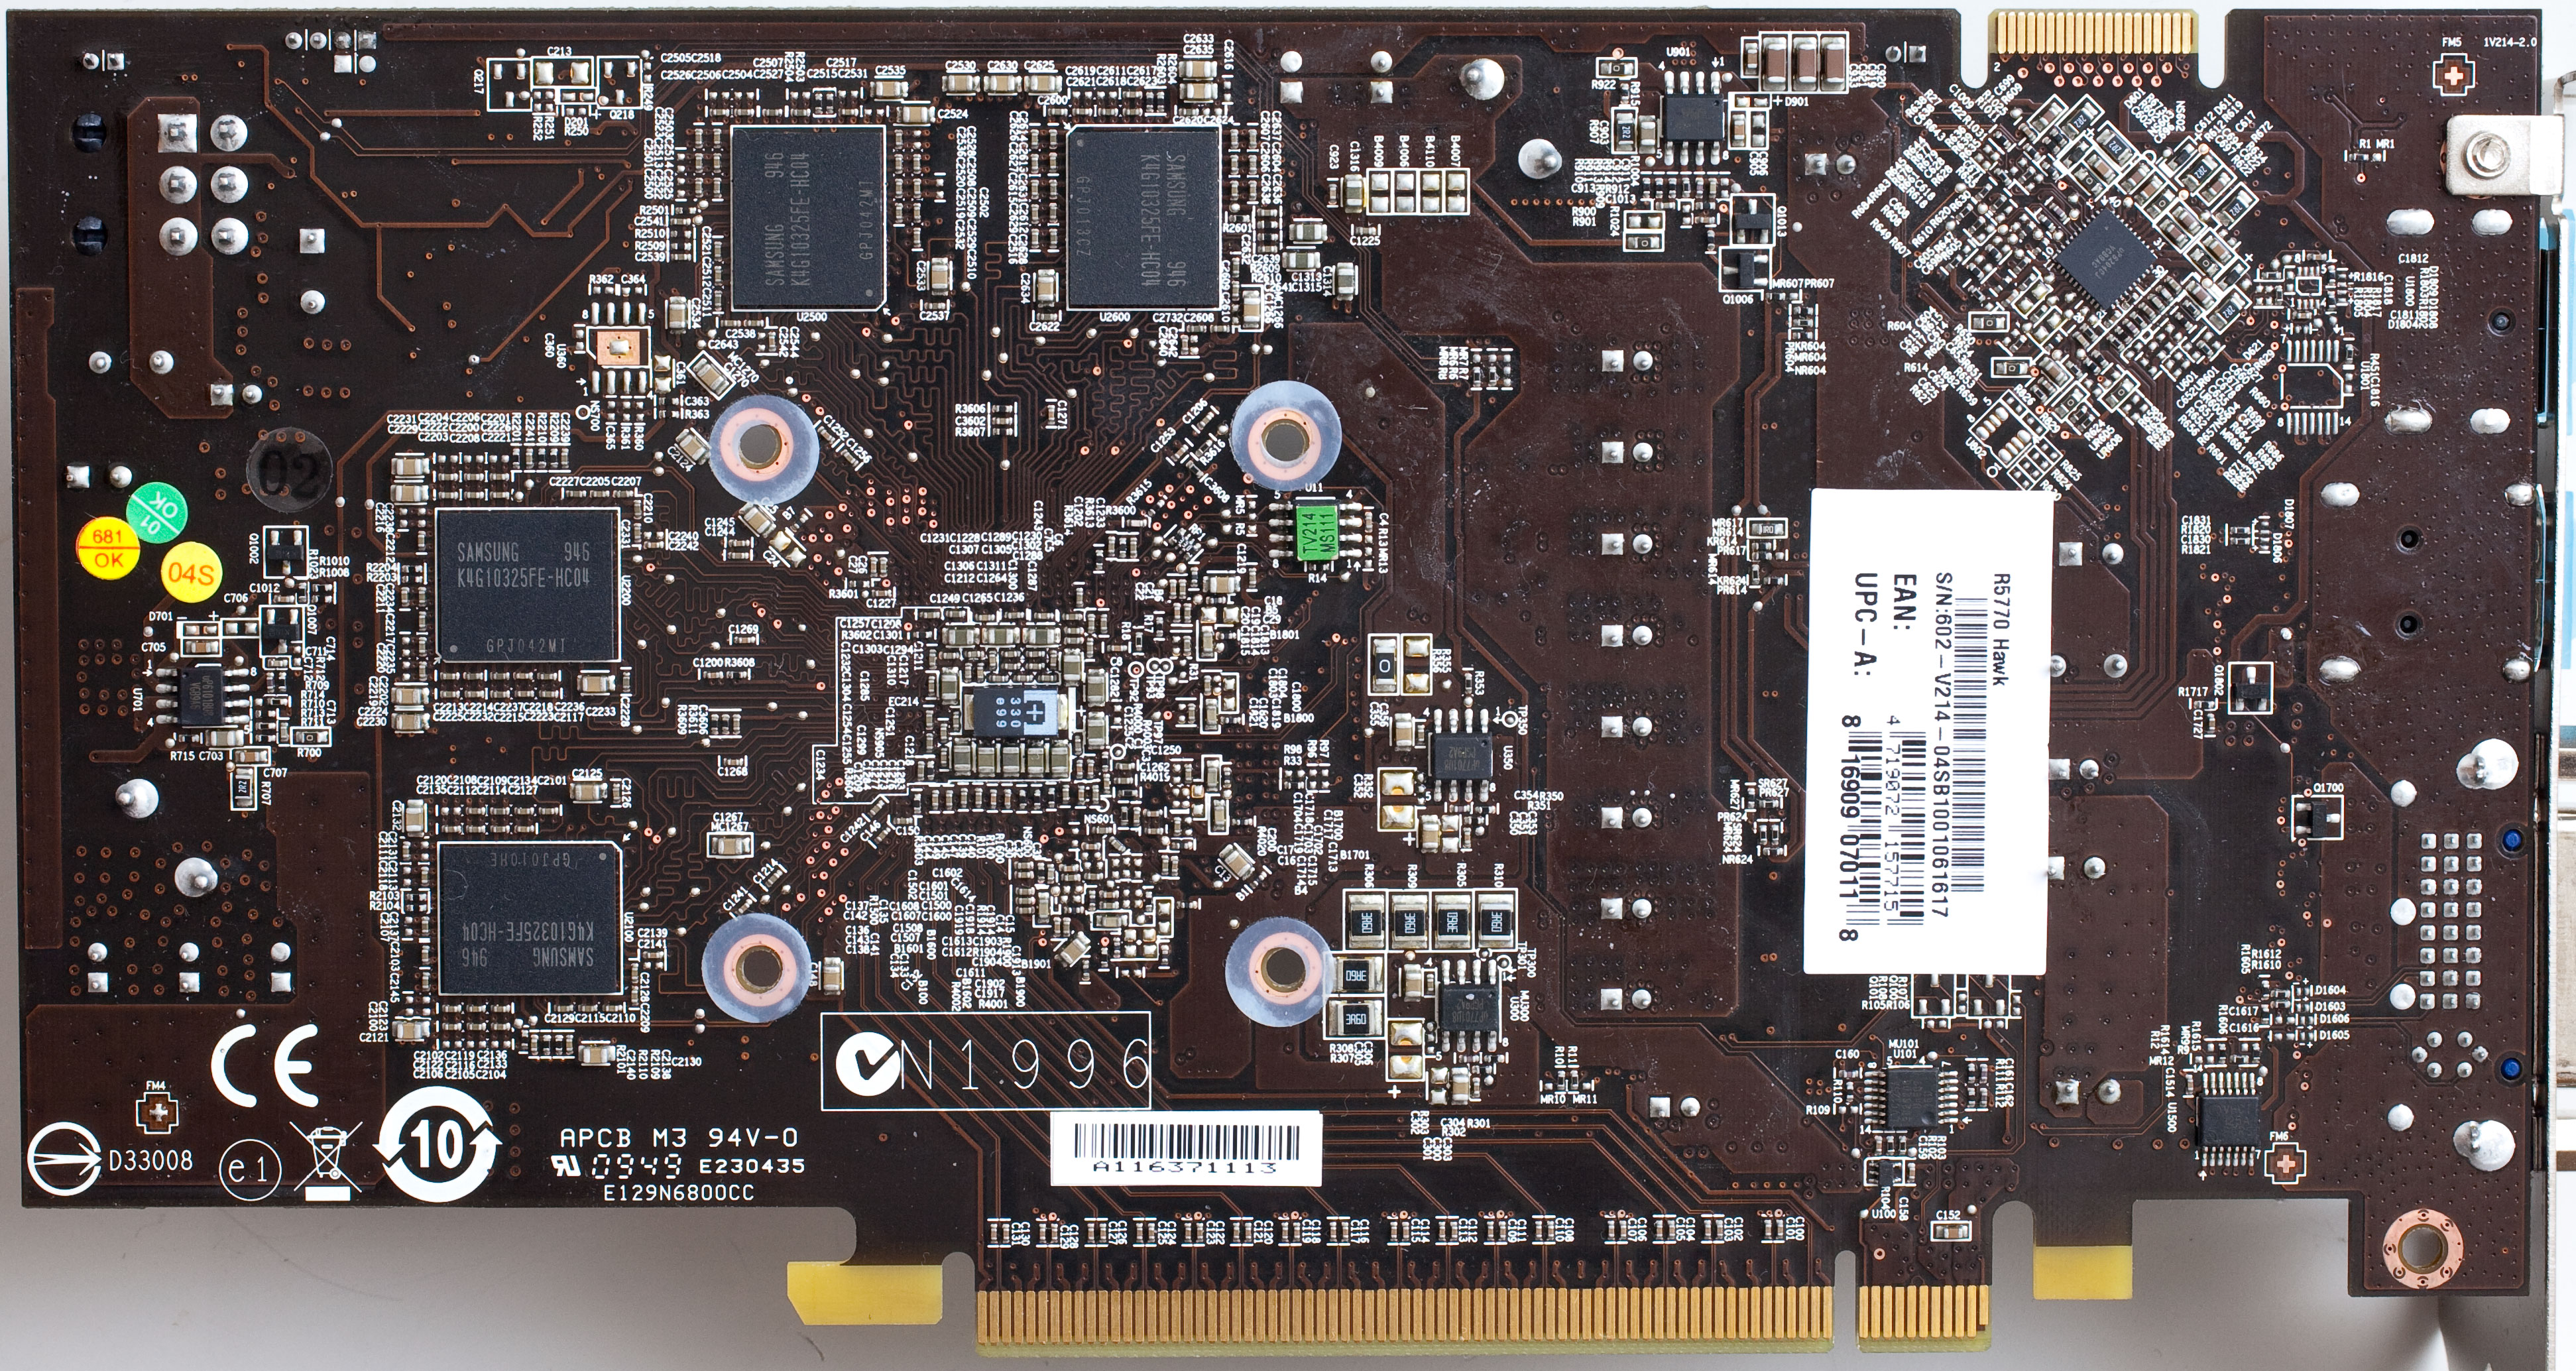 MSI Radeon HD 5770 Hawk Review - The Card | TechPowerUp